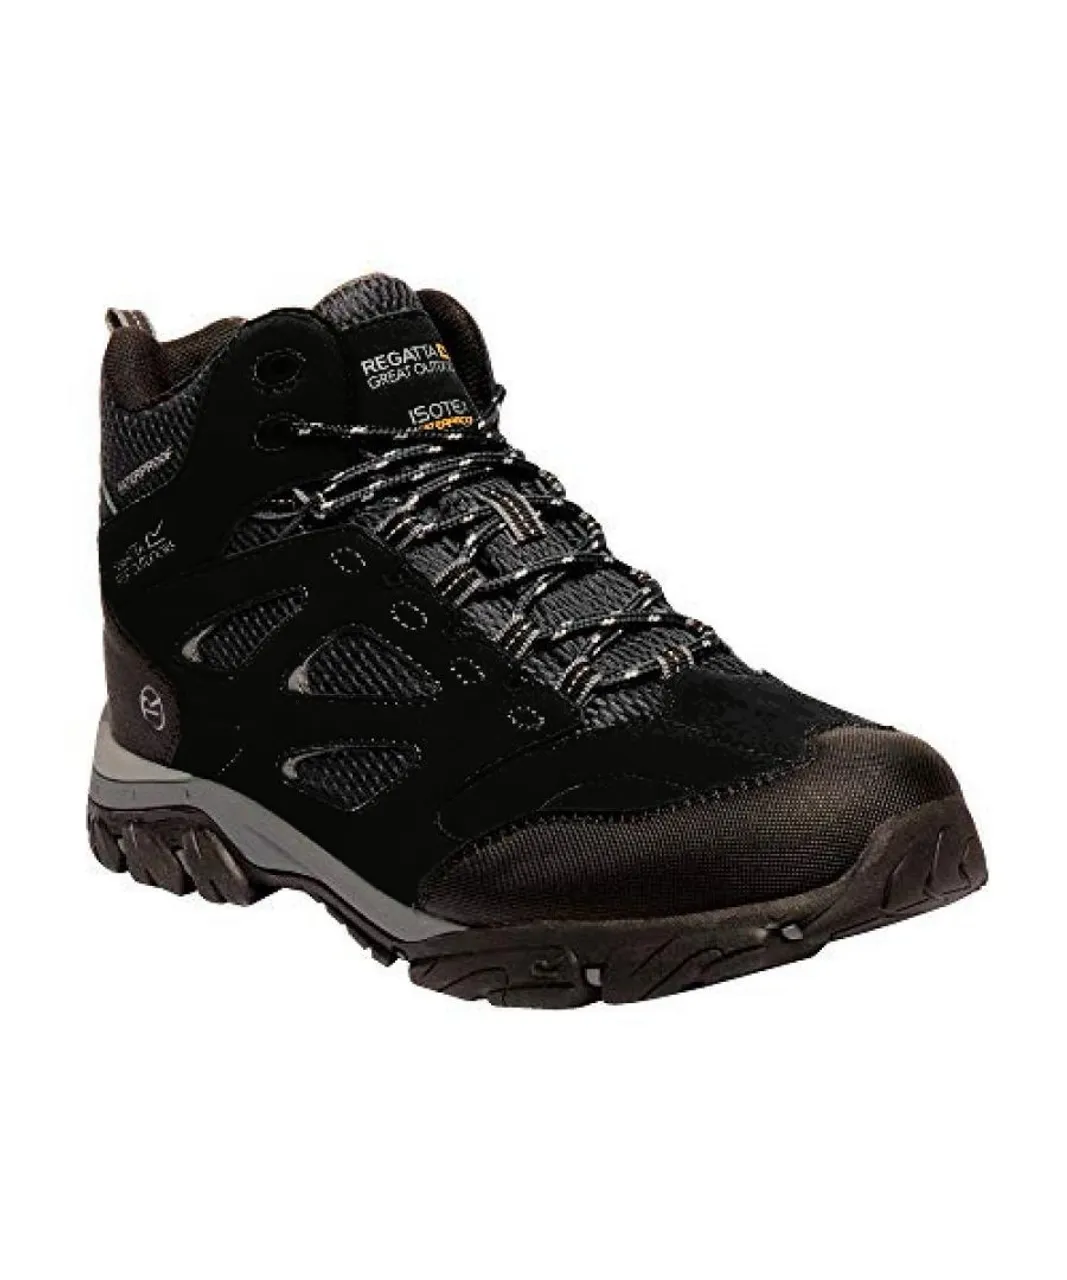 Regatta Mens Holcombe IEP Mid Hiking Boots (Black/Granite)